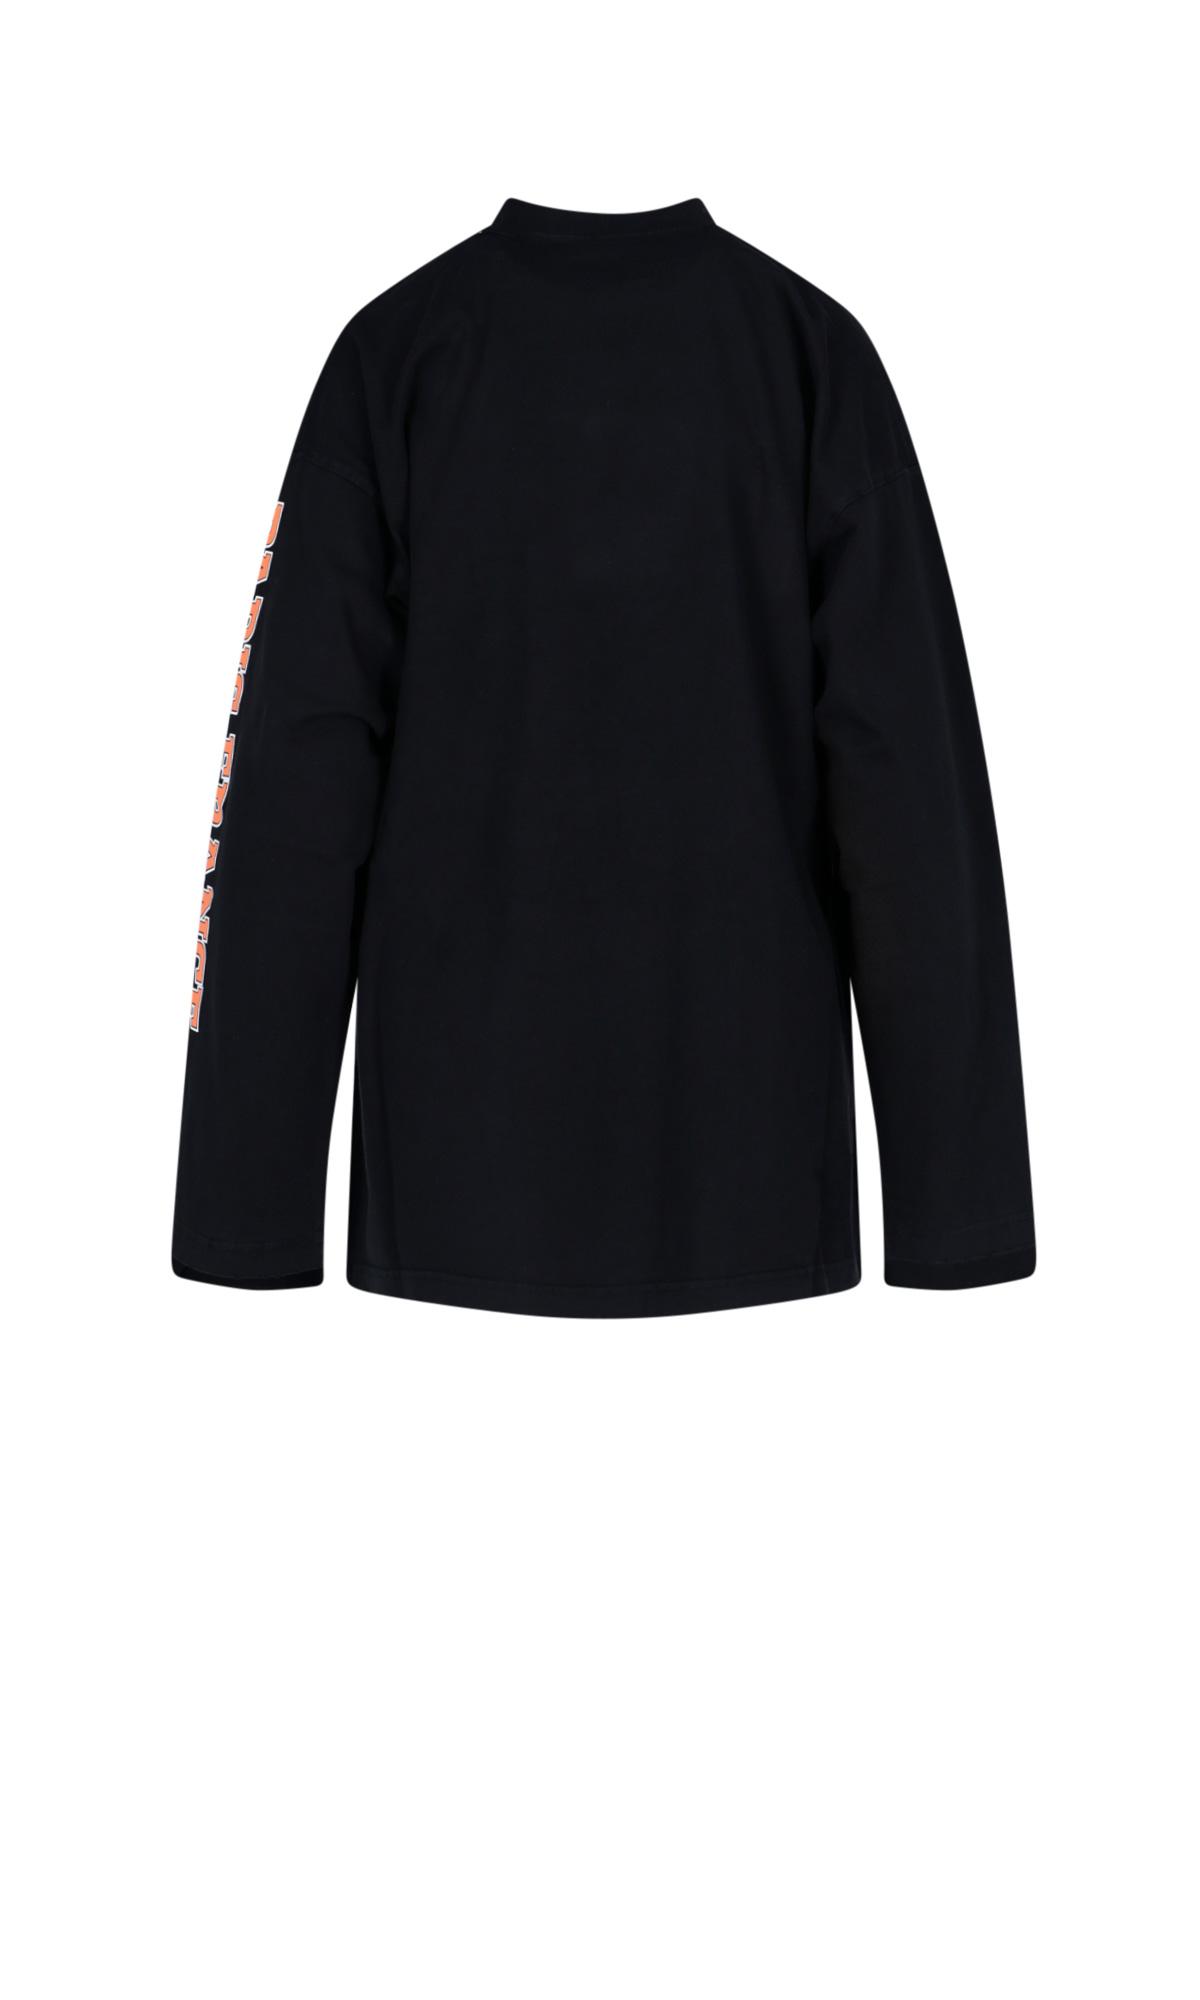 Balenciaga 'logo Maison' Long Sleeve Shirt in Black | Lyst